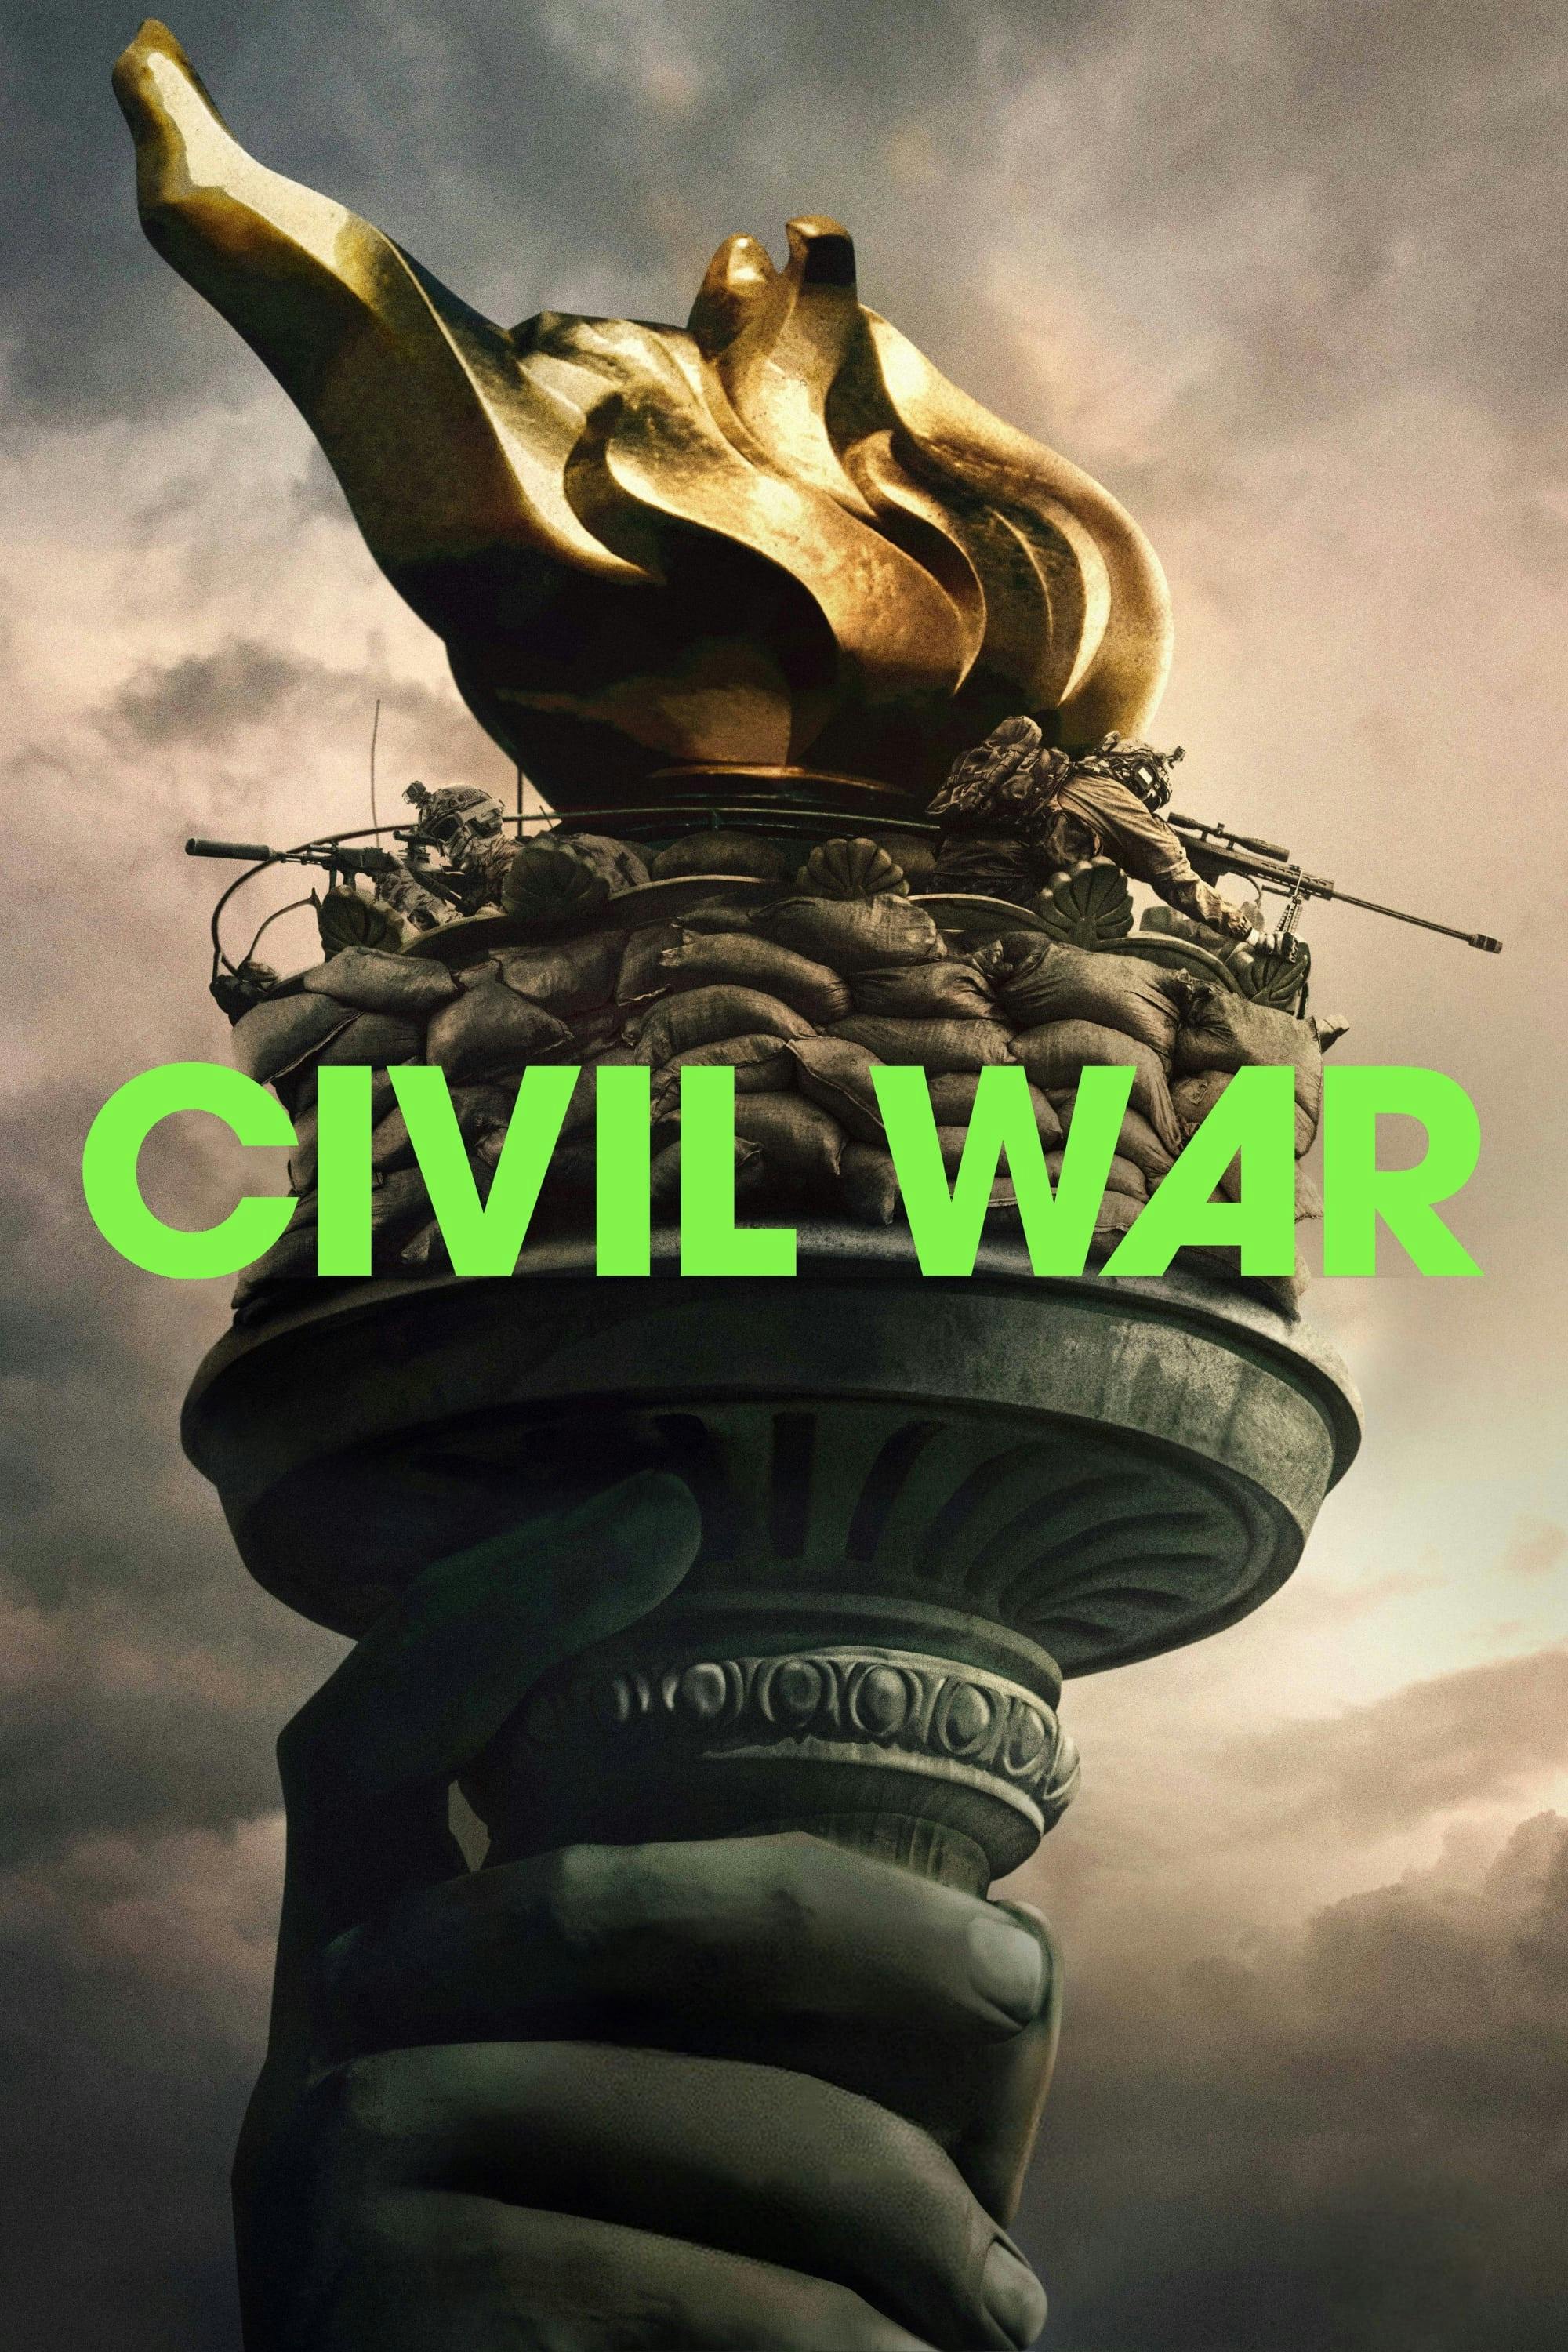 Movie poster of "Civil War"